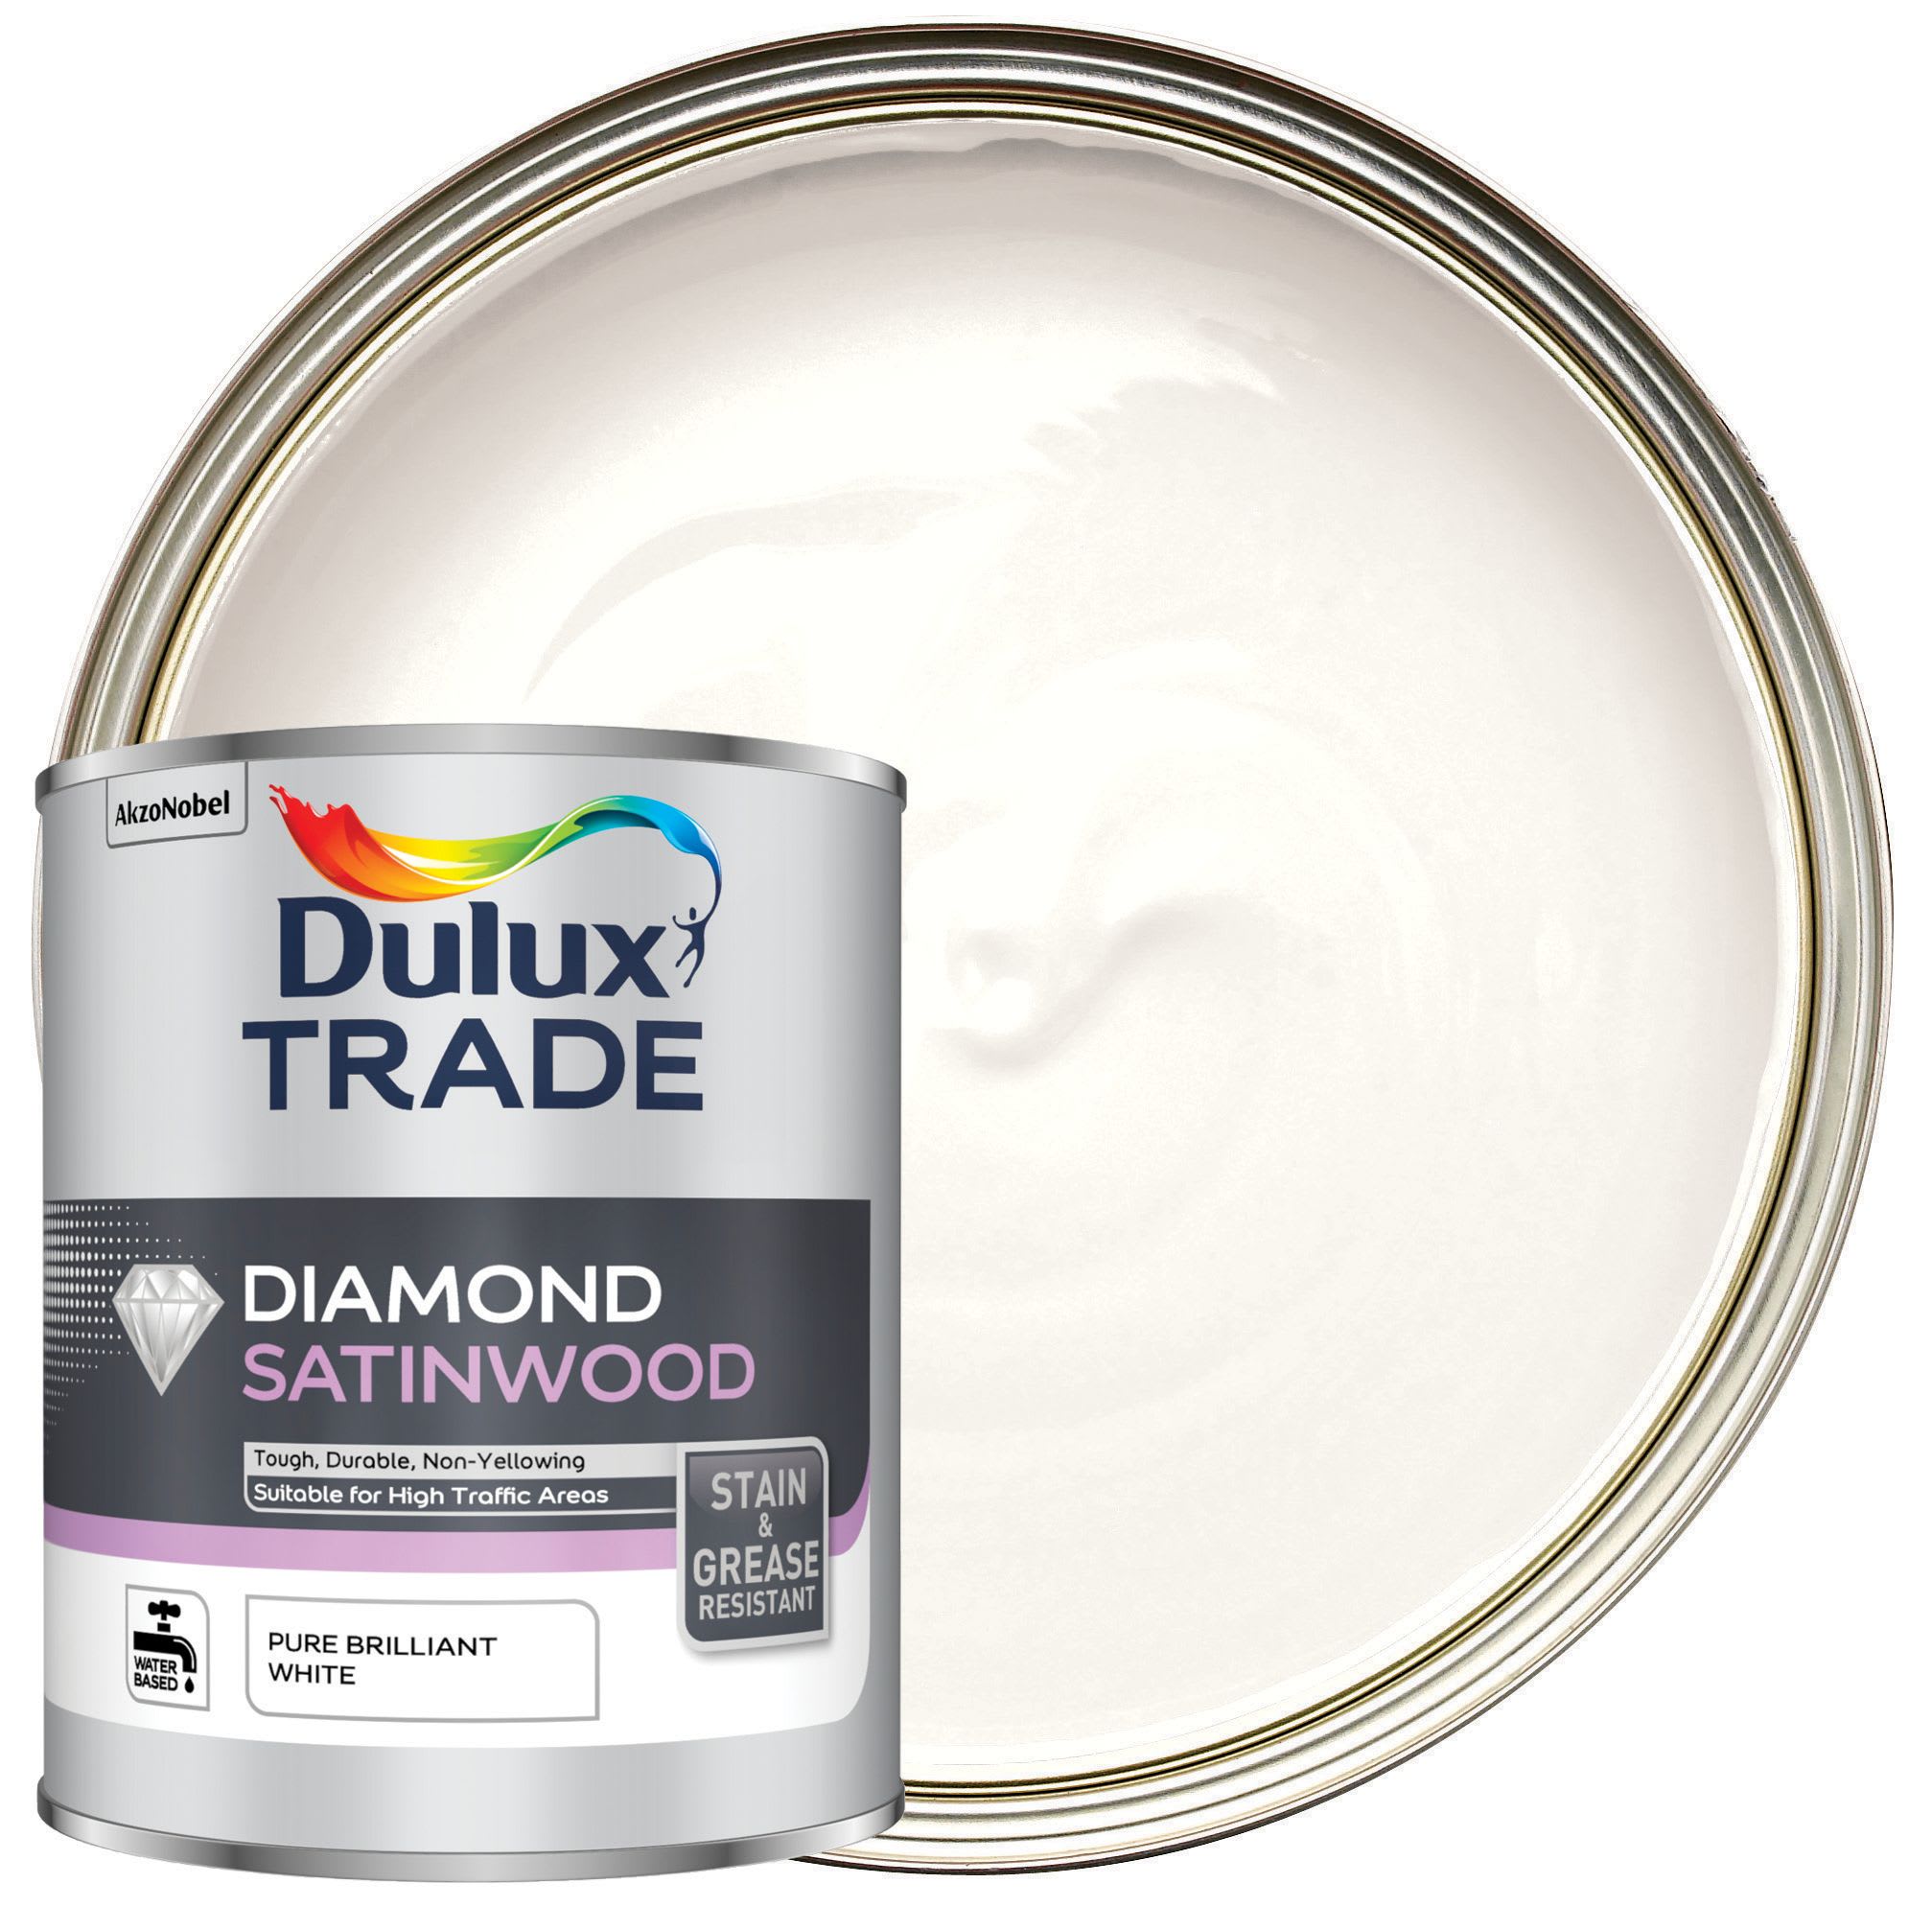 Dulux Trade Diamond Satinwood Paint - Pure Brilliant